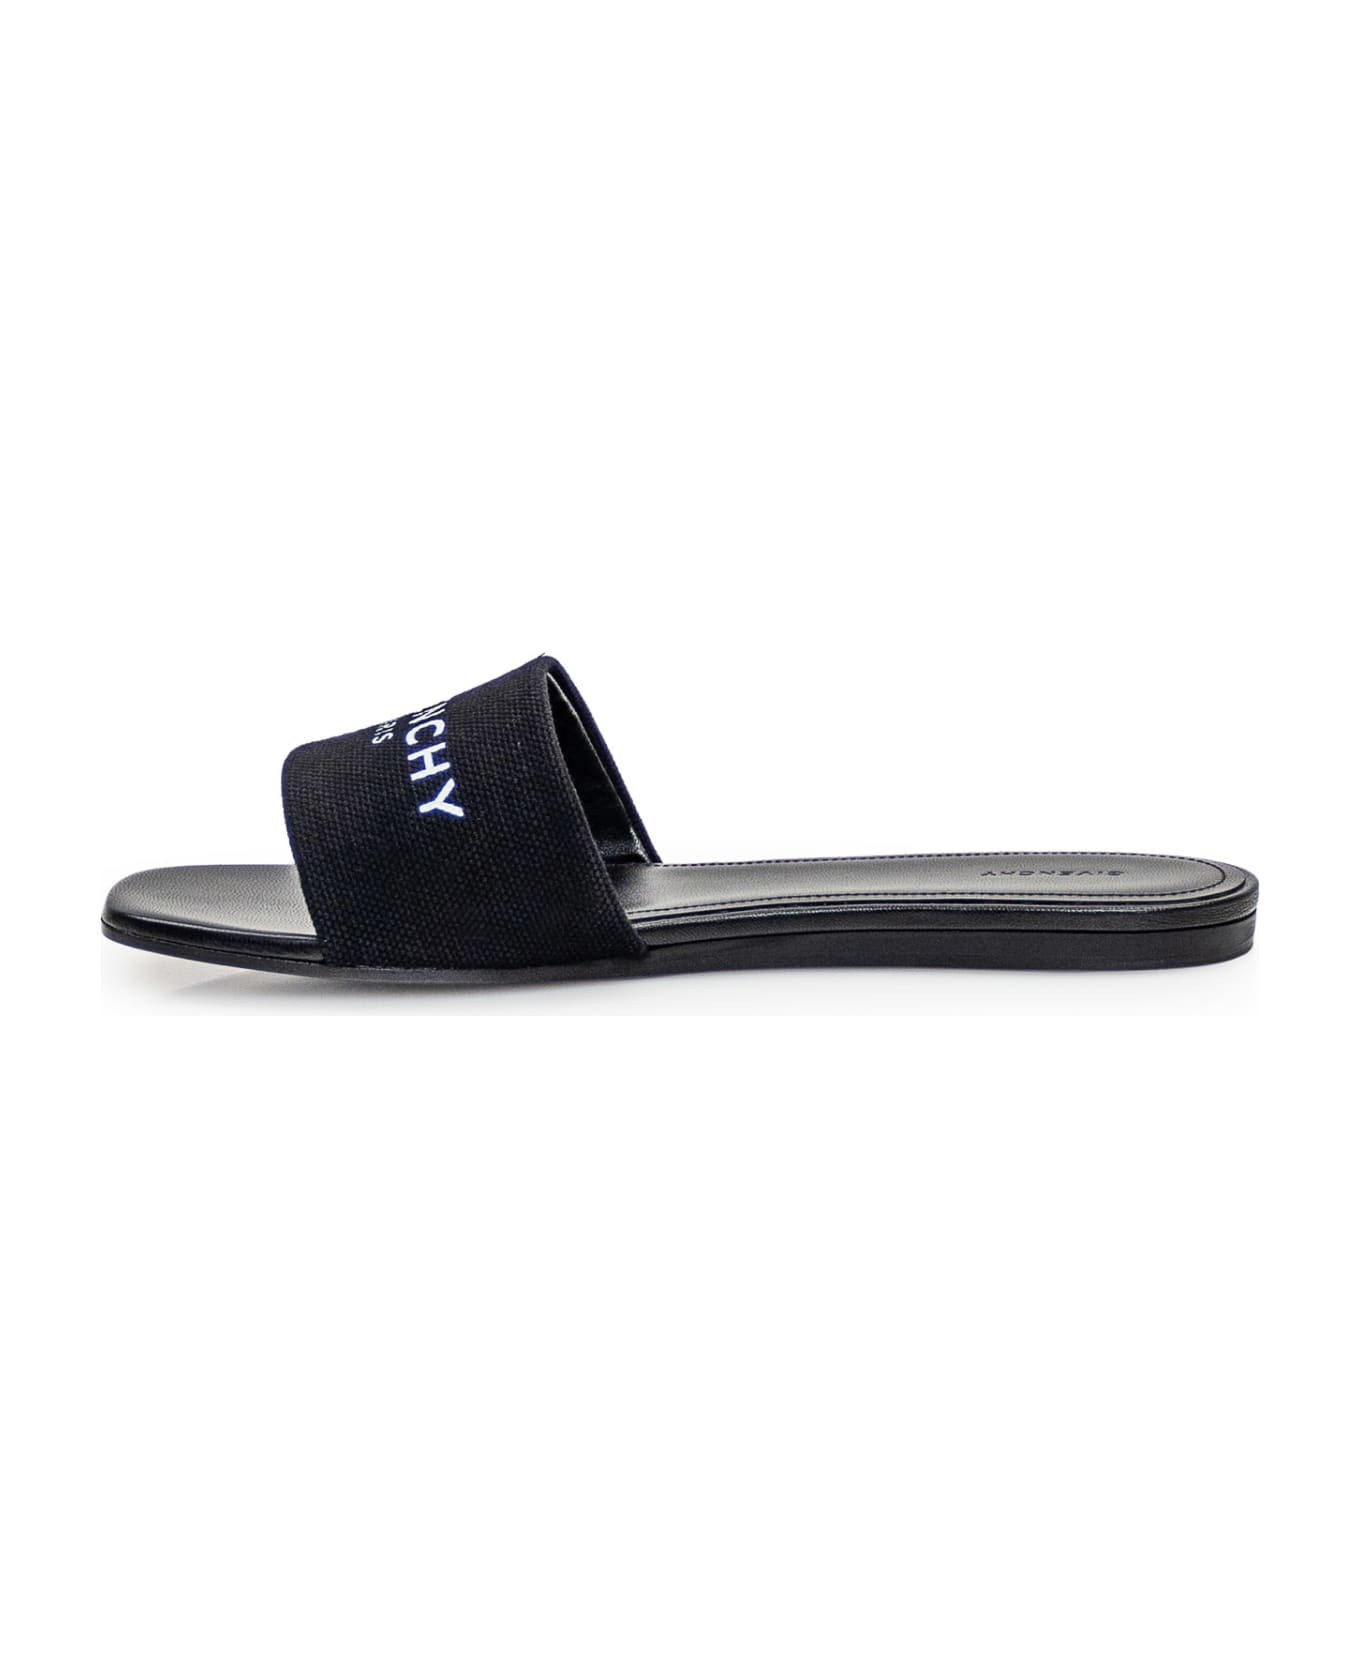 Givenchy 4g Flat Sandal - black